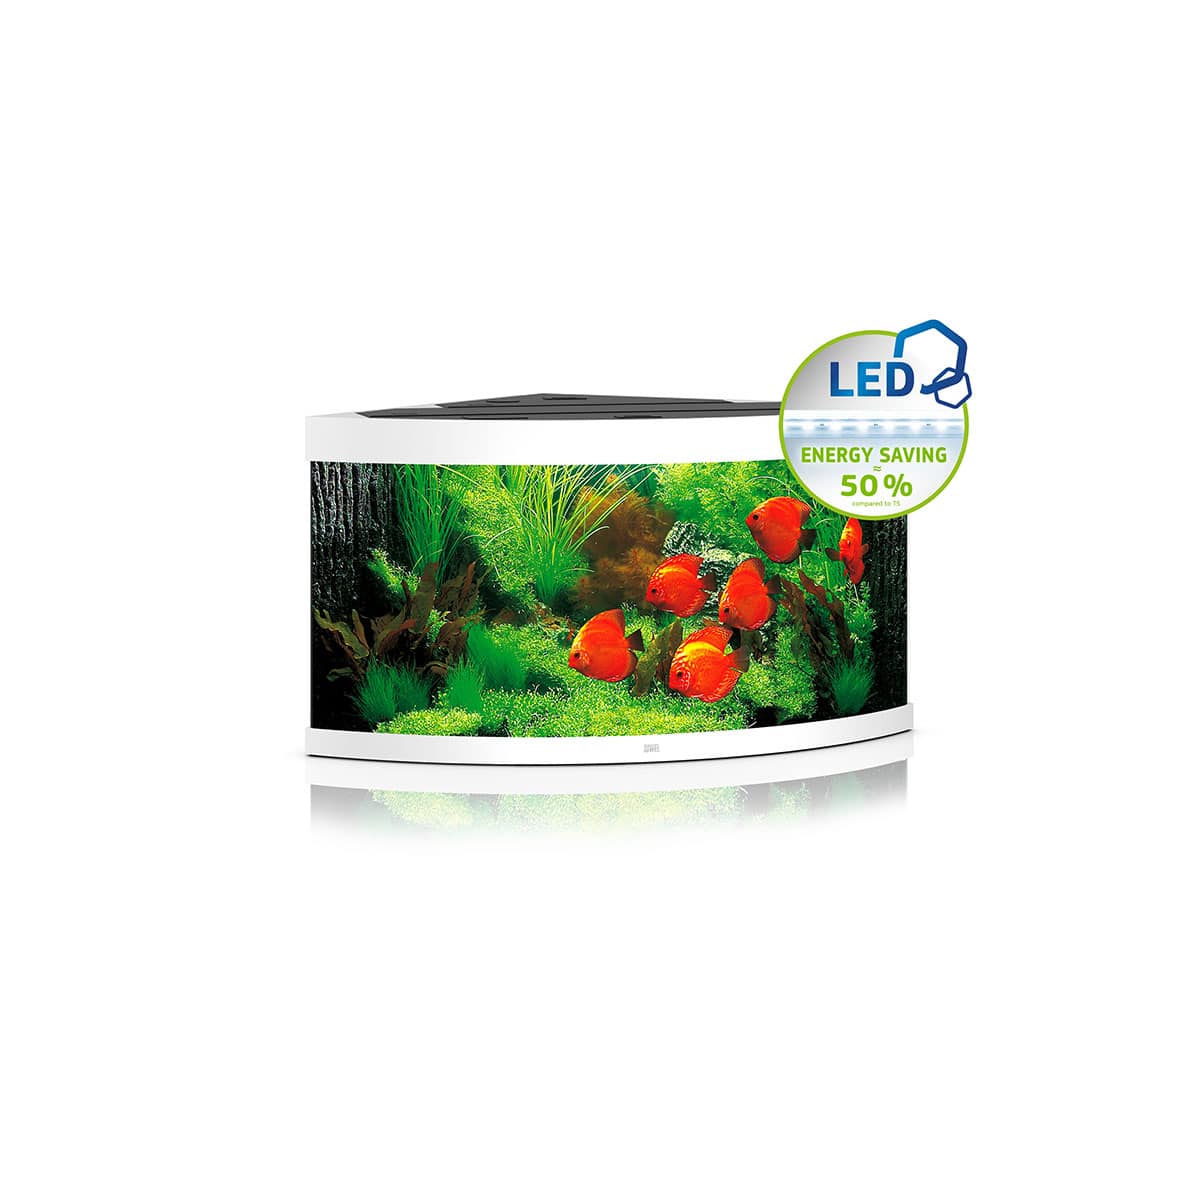 Juwel Komplett Eck-Aquarium Trigon 350 LED ohne Unterschrank weiß